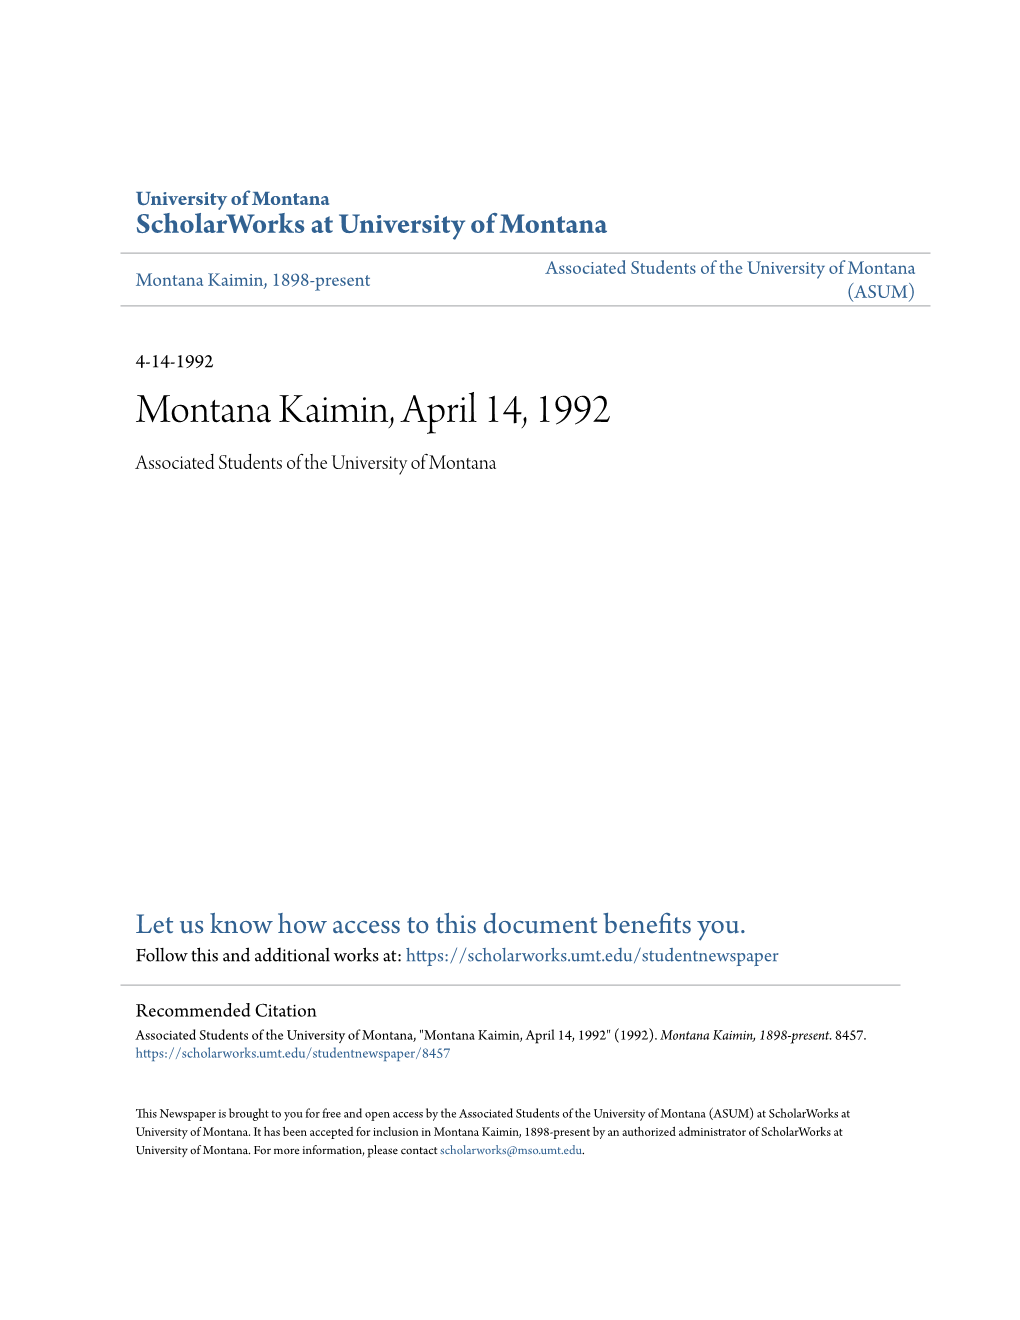 Montana Kaimin, April 14, 1992 Associated Students of the University of Montana